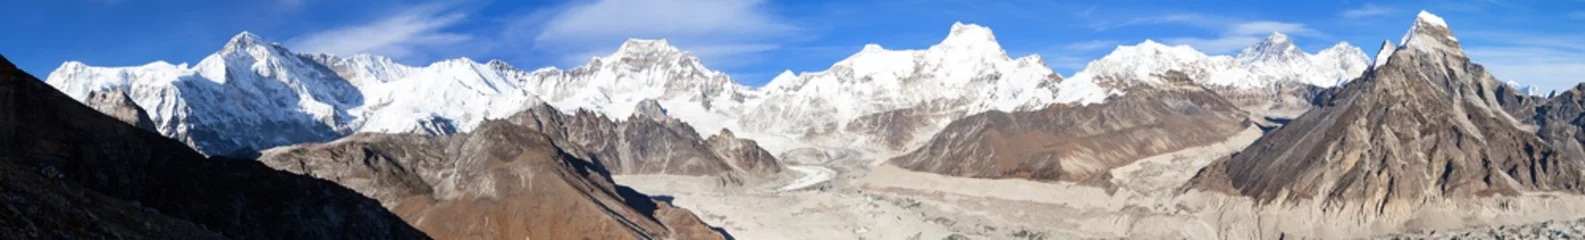 Cercles muraux Cho Oyu mount Everest and Lhotse, Nepal Himalayas mountains